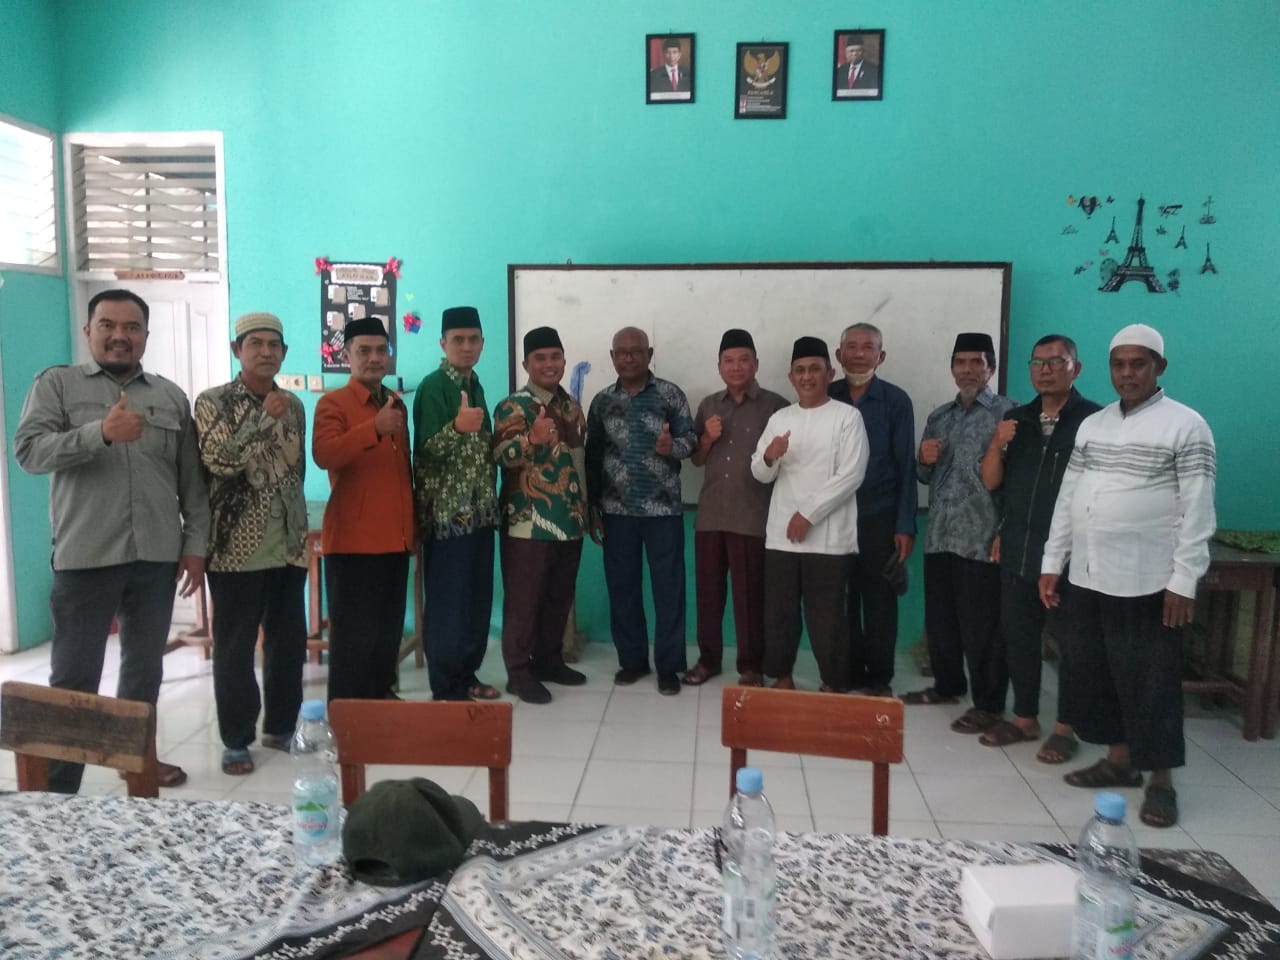 Novan Heriyanto Membuka Muscab Empat Cabang Muhammadiyah Di Wilayah Timur Cirebon